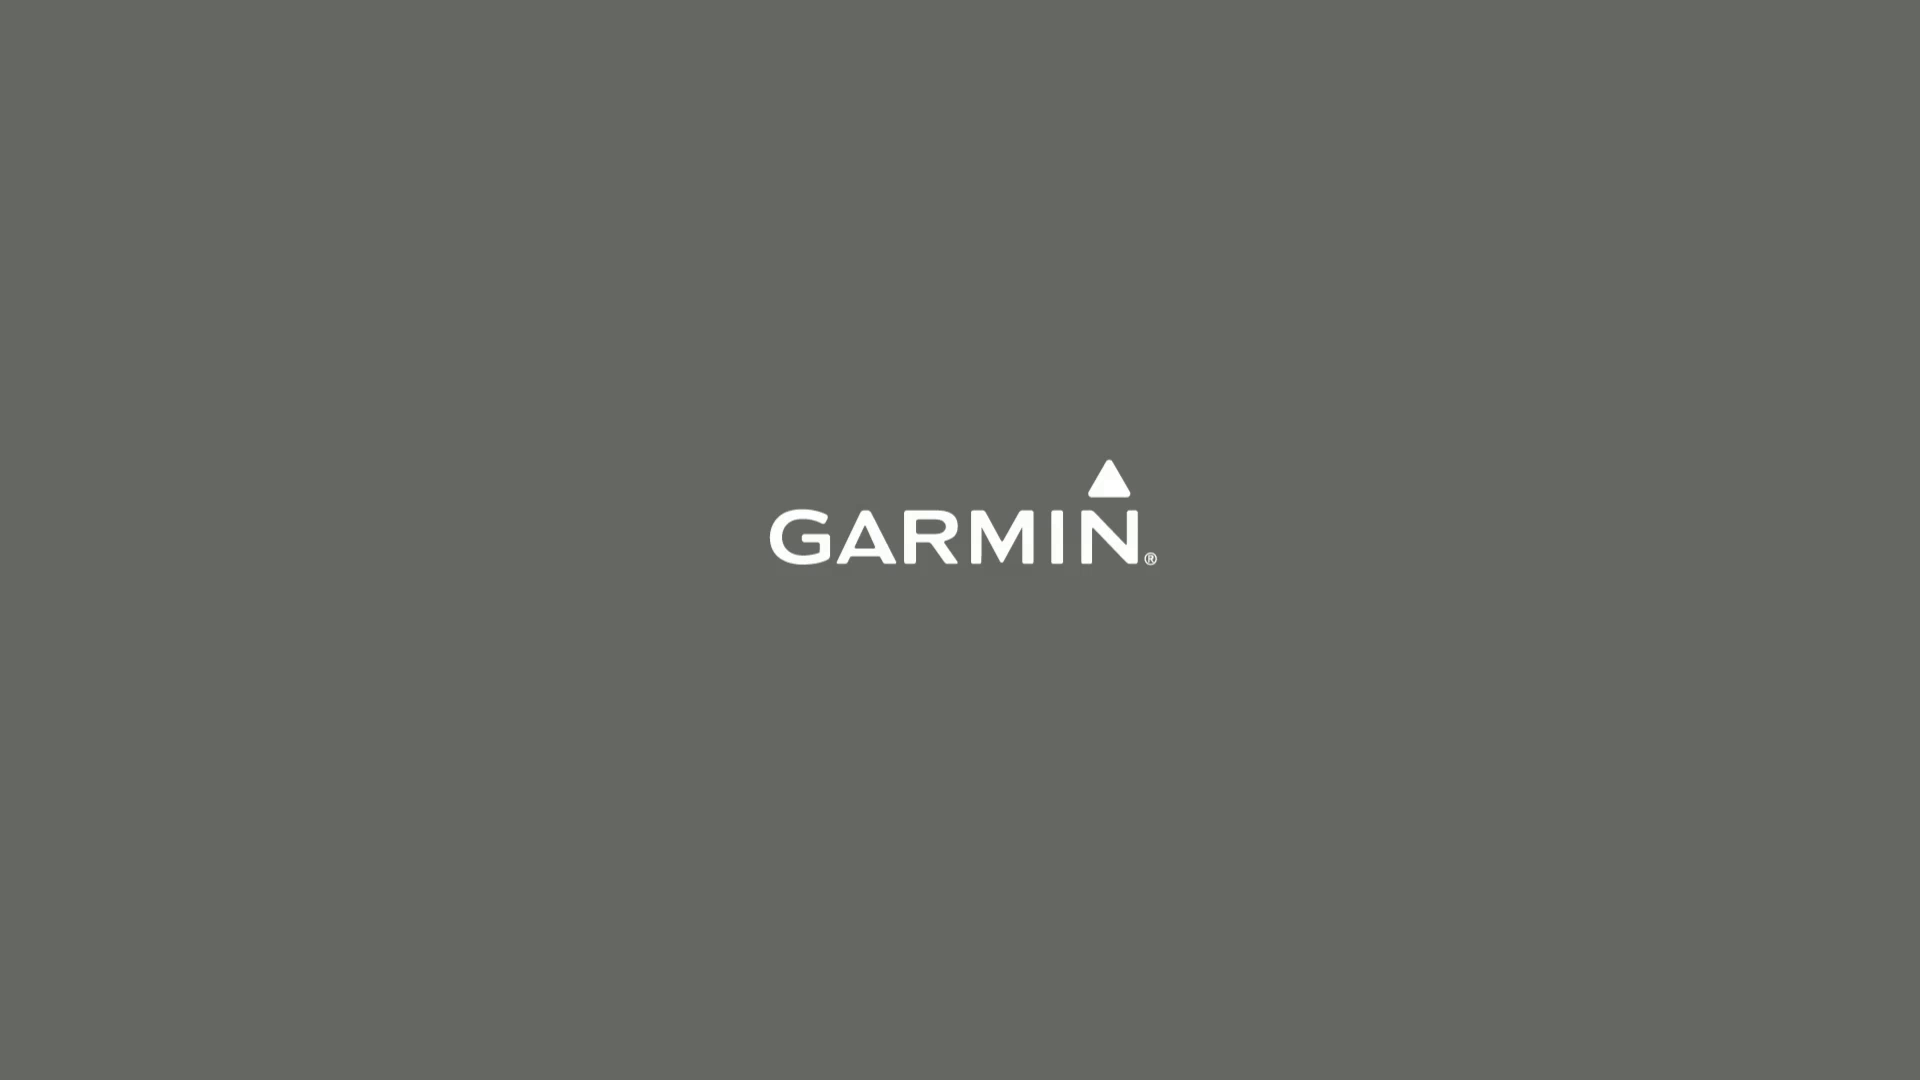 Garmin Lmt S Gps Truck Navigator With Built In Dash Cam